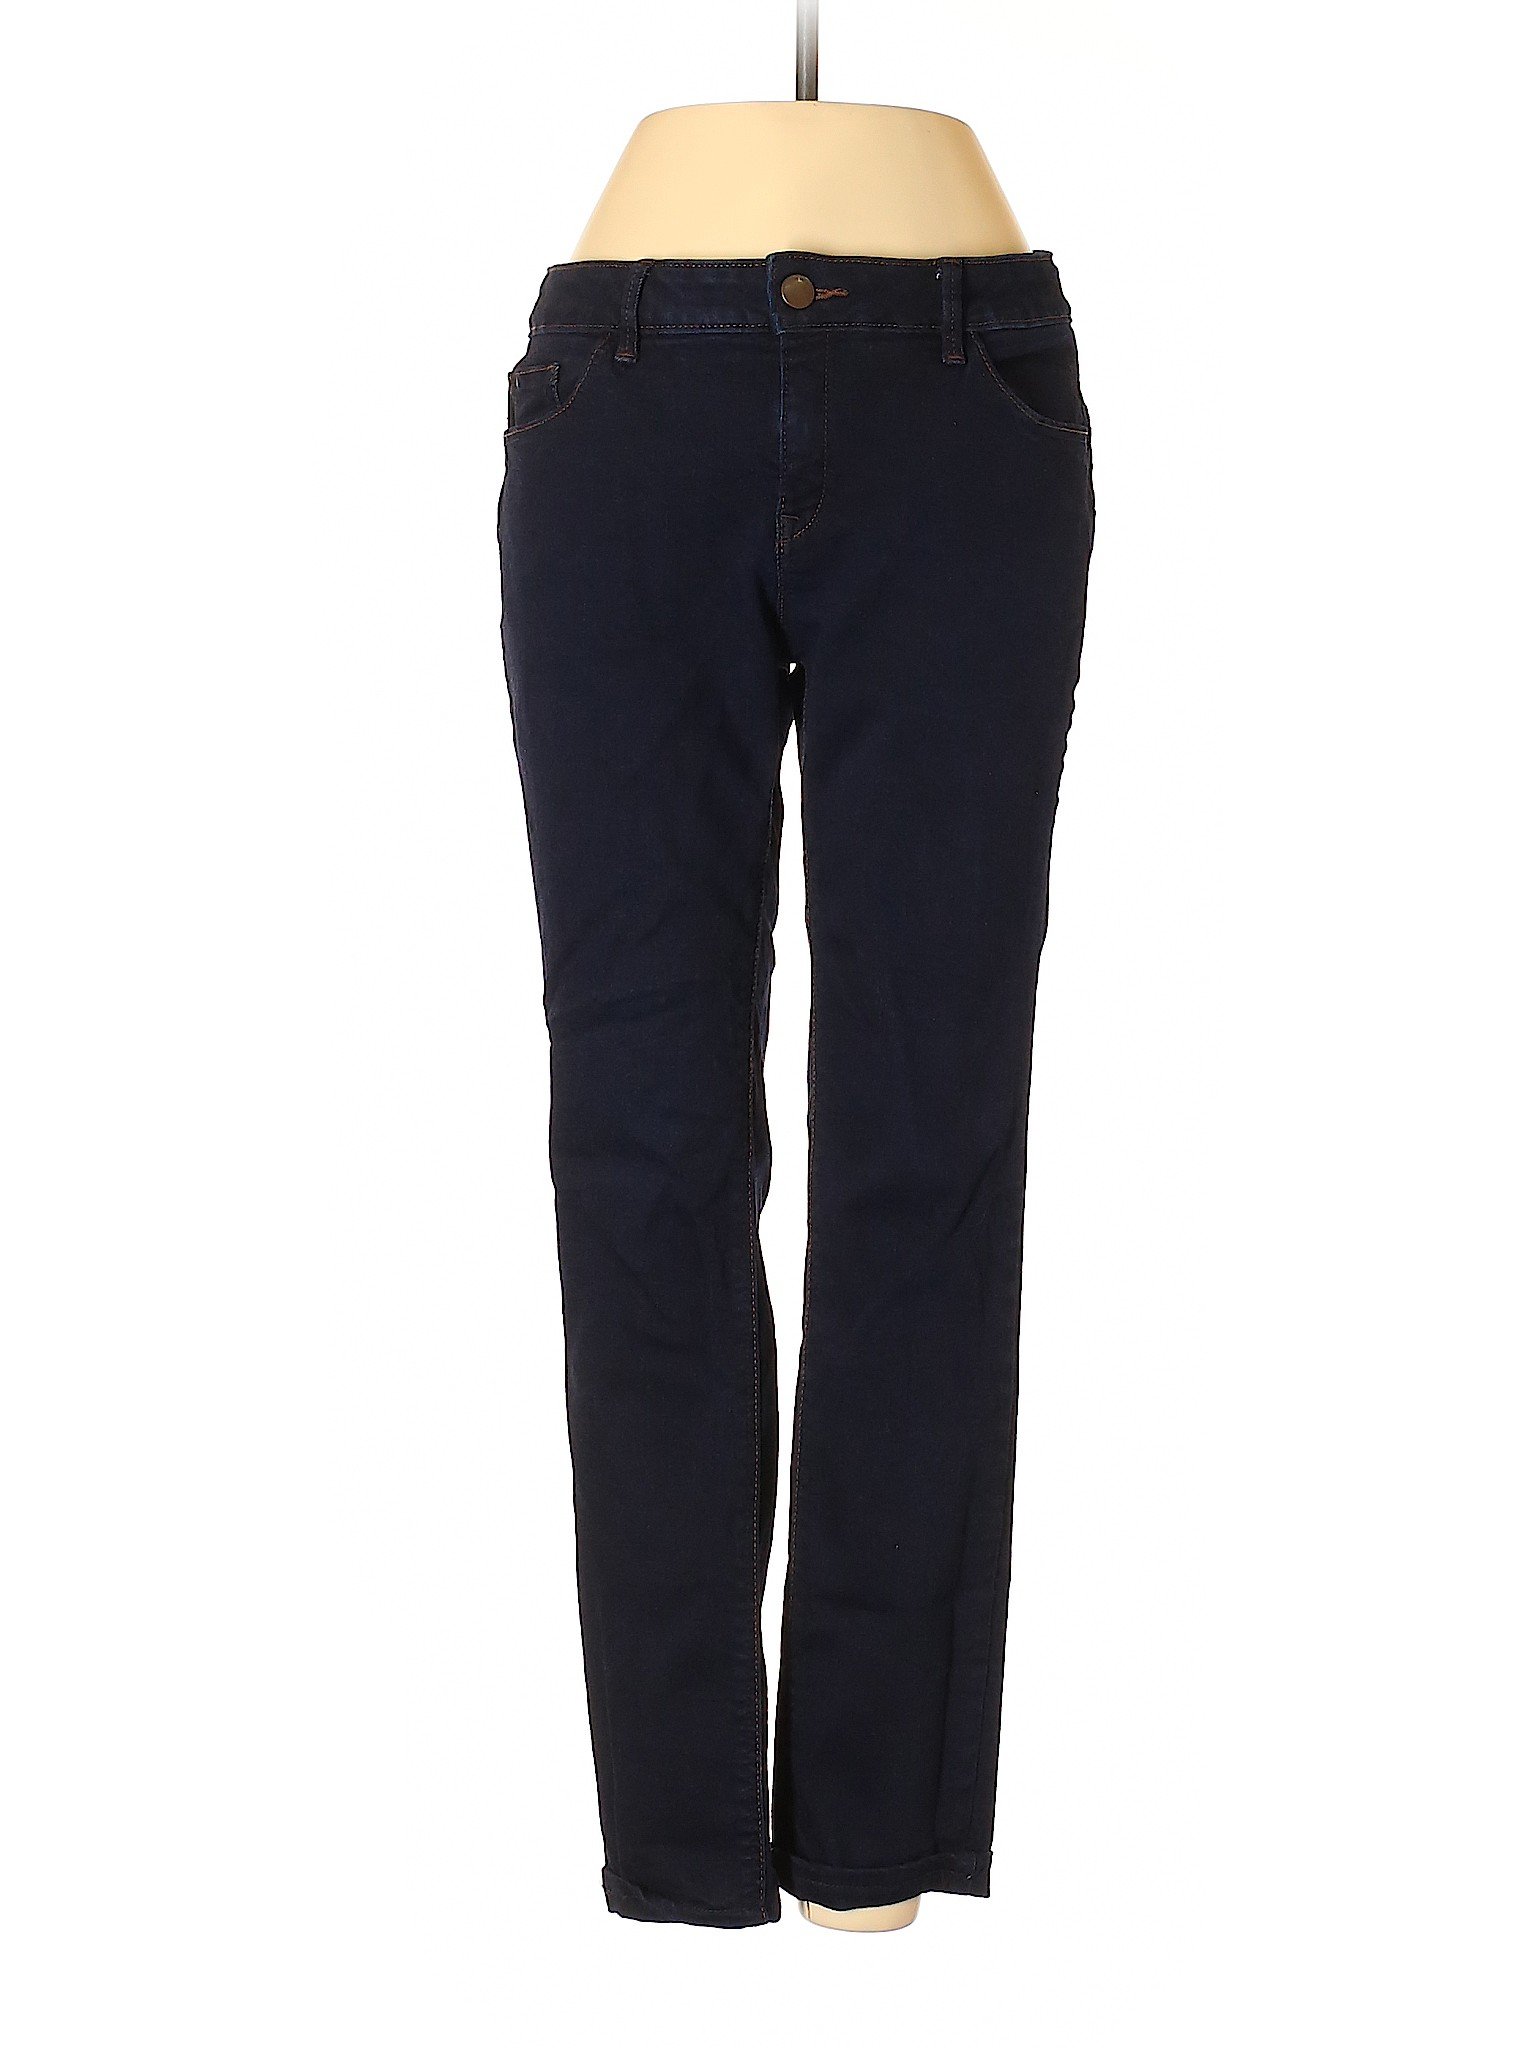 Canda C&A Solid Blue Jeans Size 36 (EU) - 80% off | thredUP